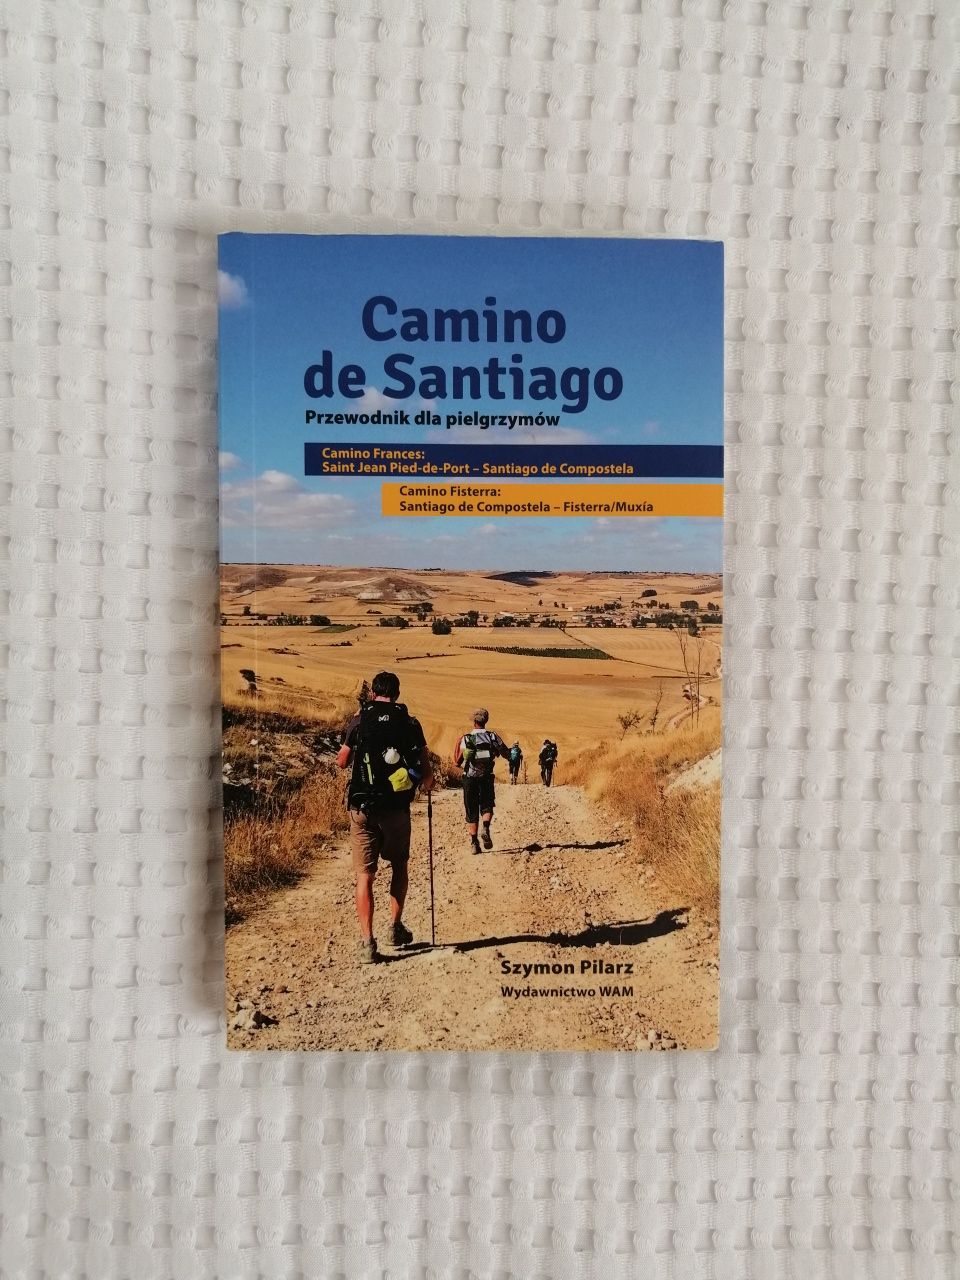 Camino de Santiago Szymon Pilarz